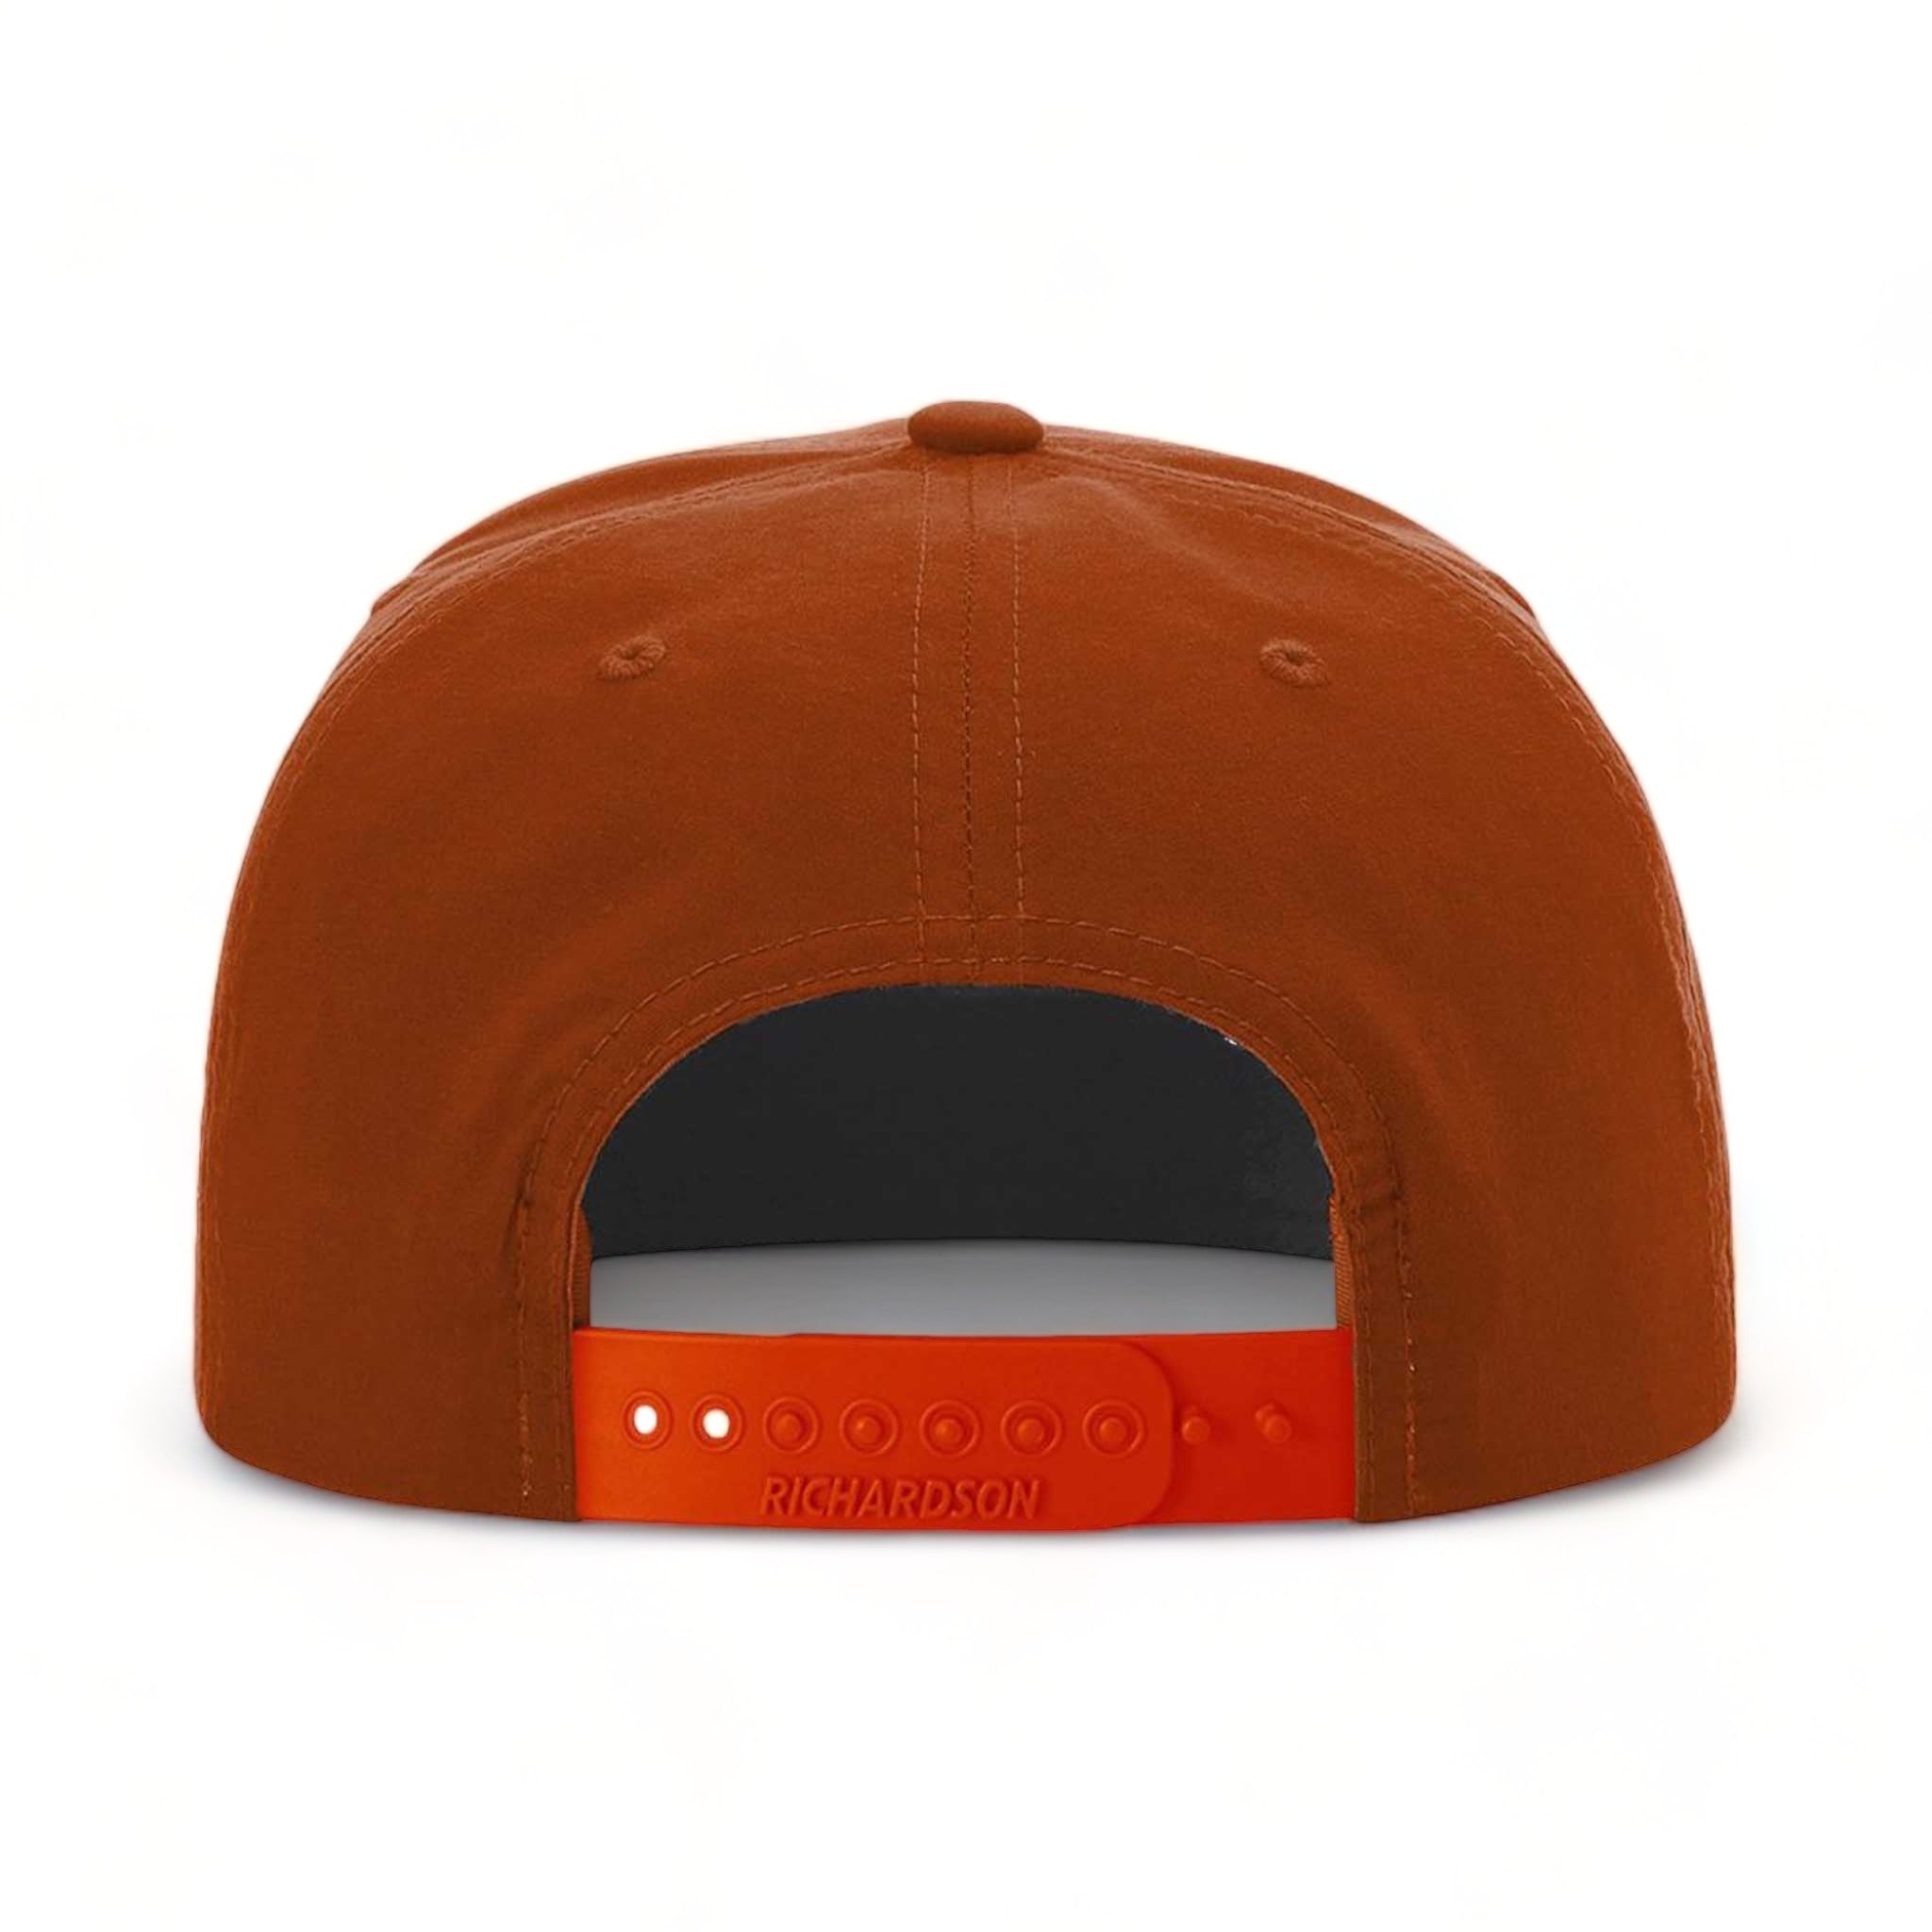 Back view of Richardson 256 custom hat in dark orange and black